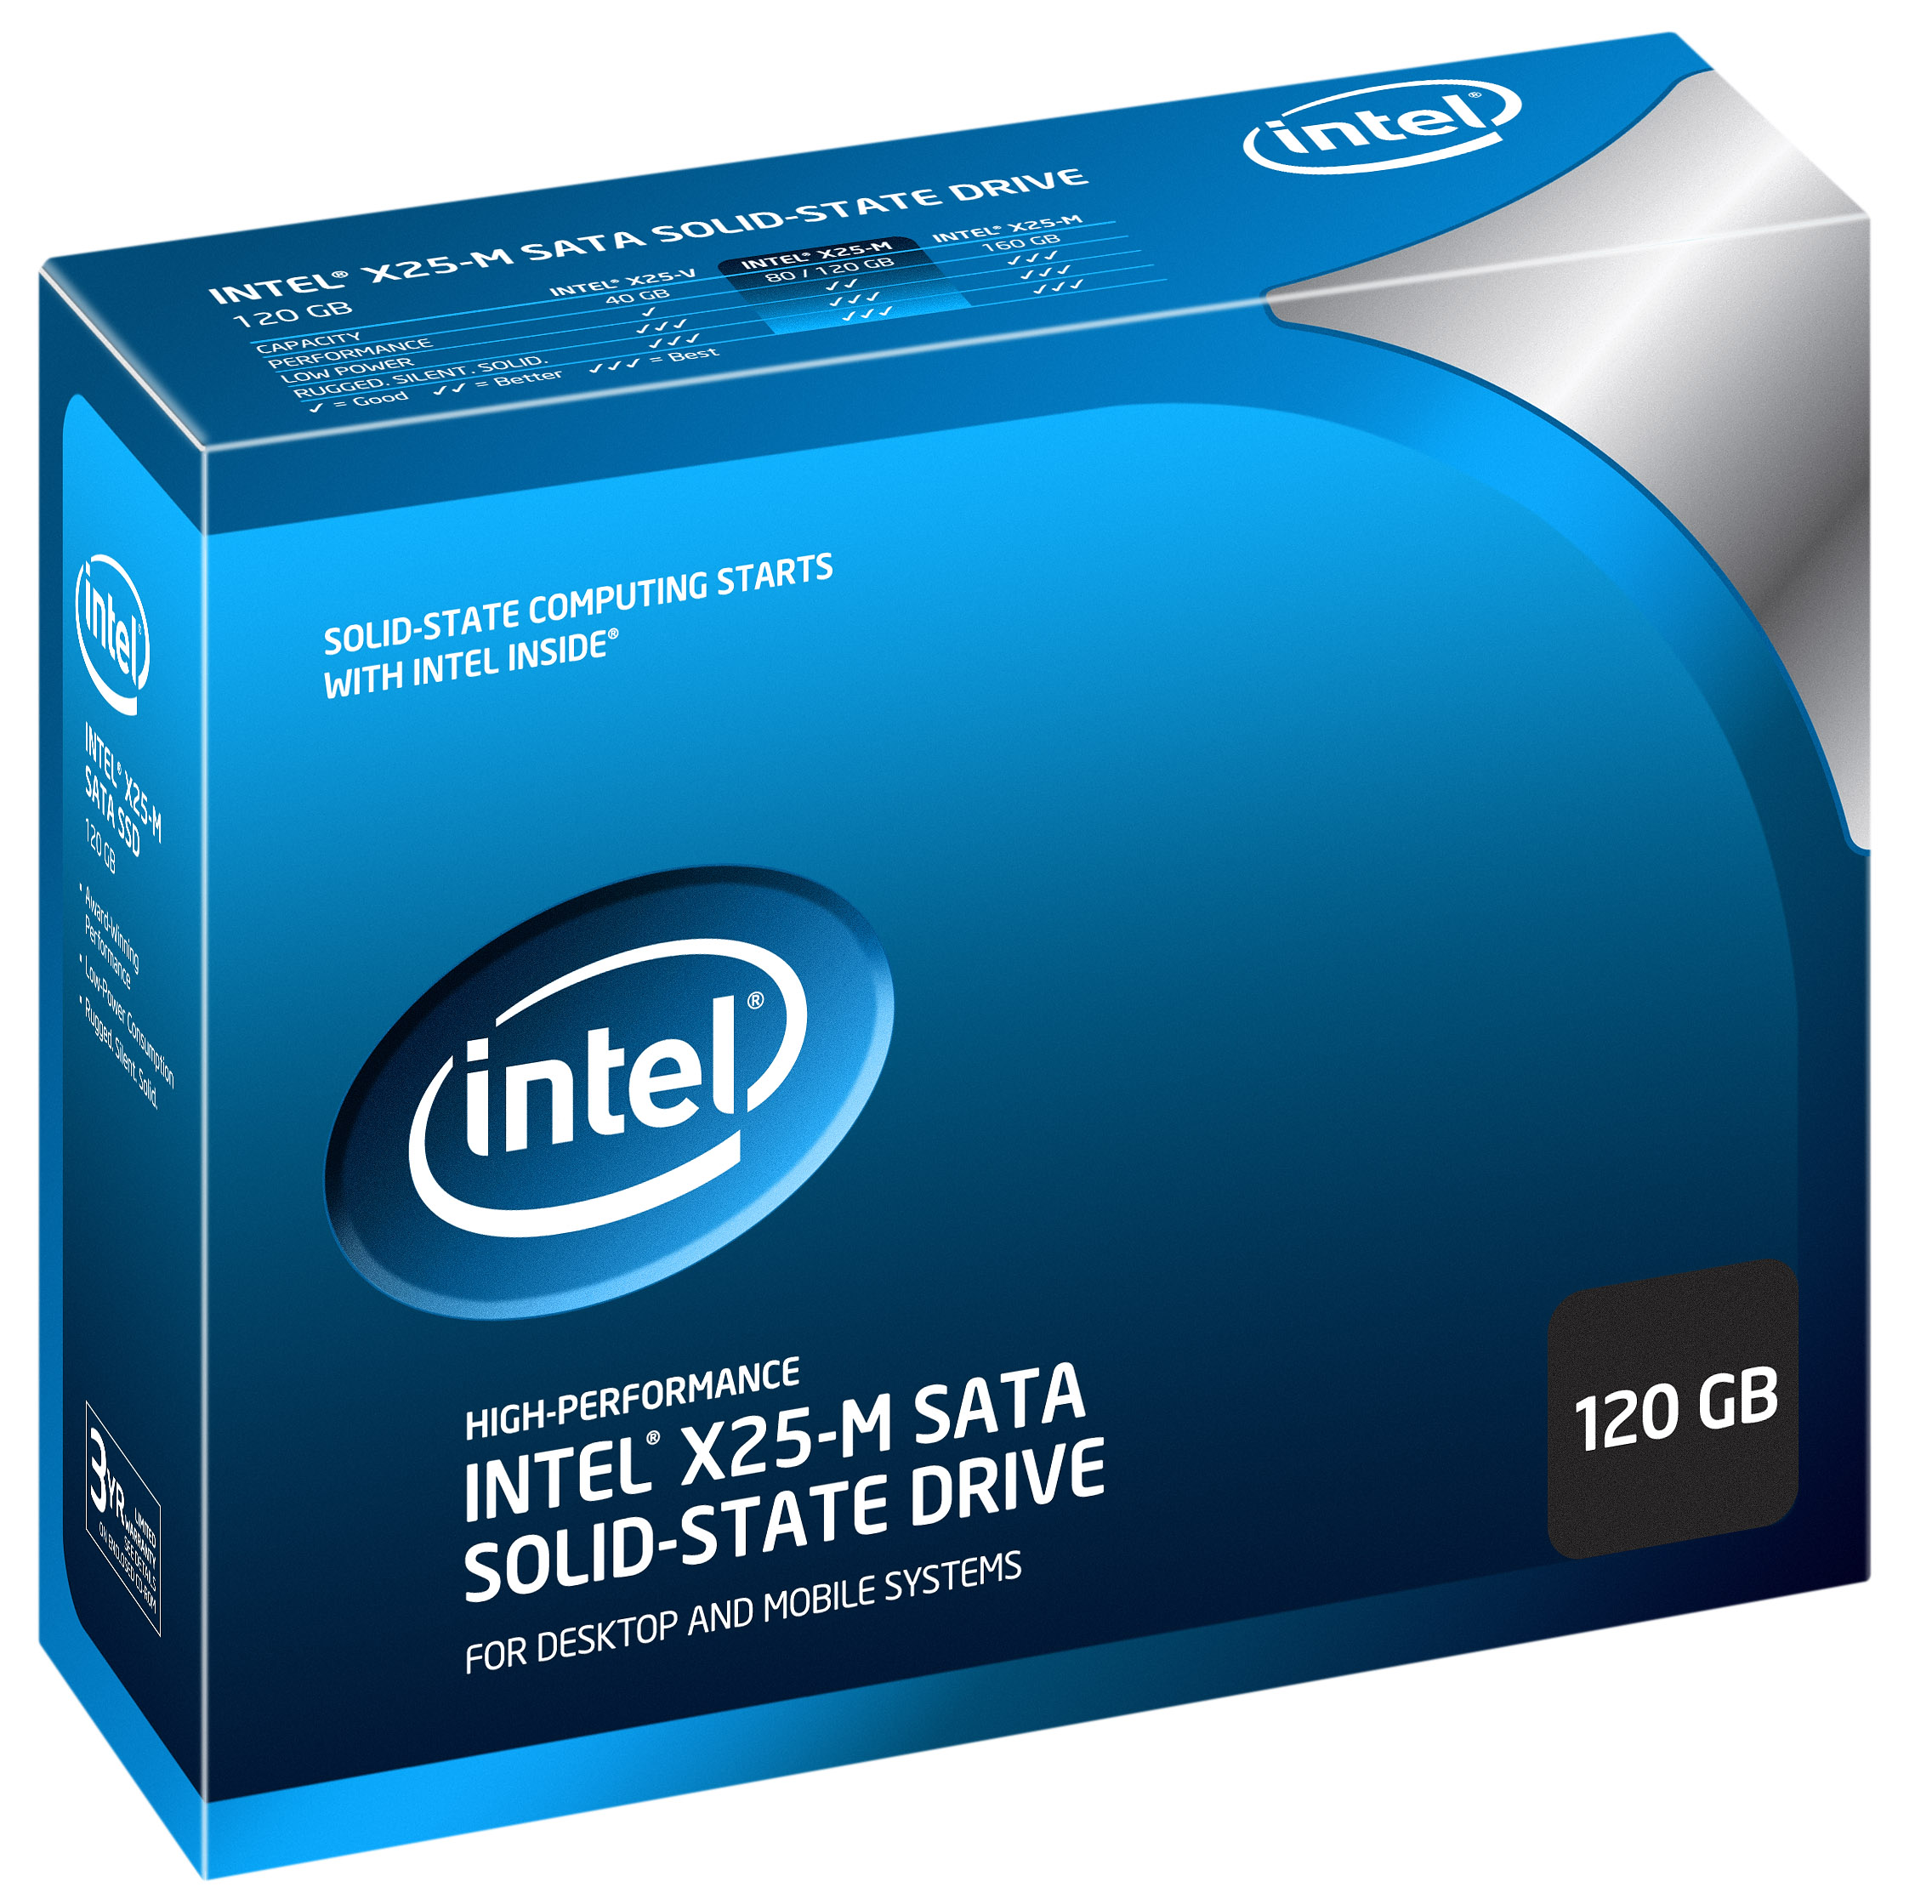 Media asset in full size related to 3dfxzone.it news item entitled as follows: Intel riduce i prezzi degli SSD X25-M e ne lancia uno da 120GB | Image Name: news14192_1.jpg